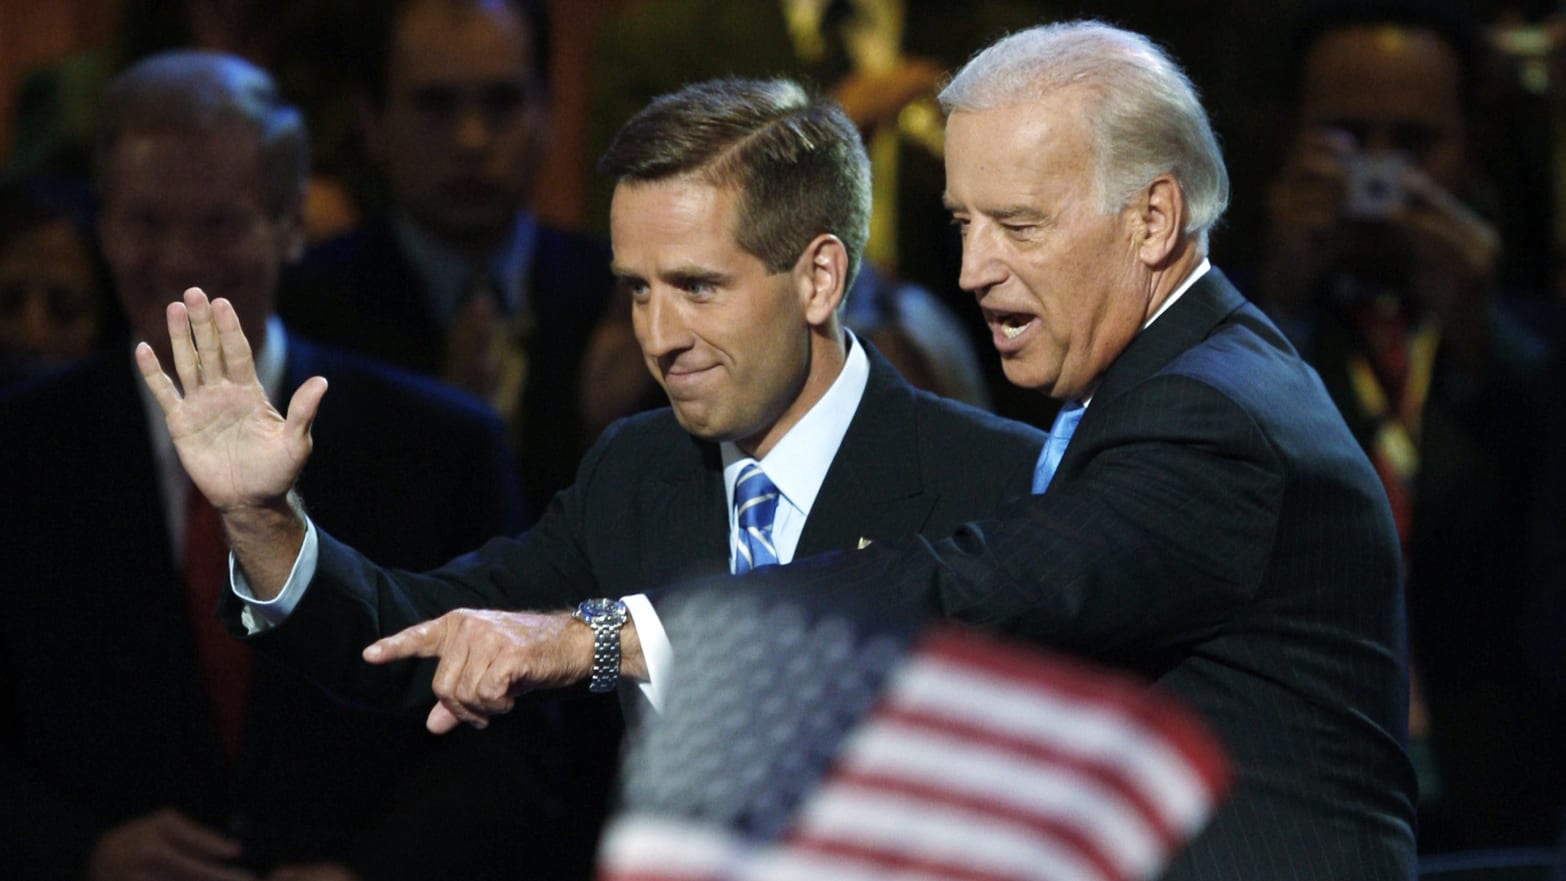 US Democratic vice presidential candidate Senator Joe Biden (D-DE) (R) waves with his son Beau Biden at the 2008 Democratic National Convention in Denver, Colorado.